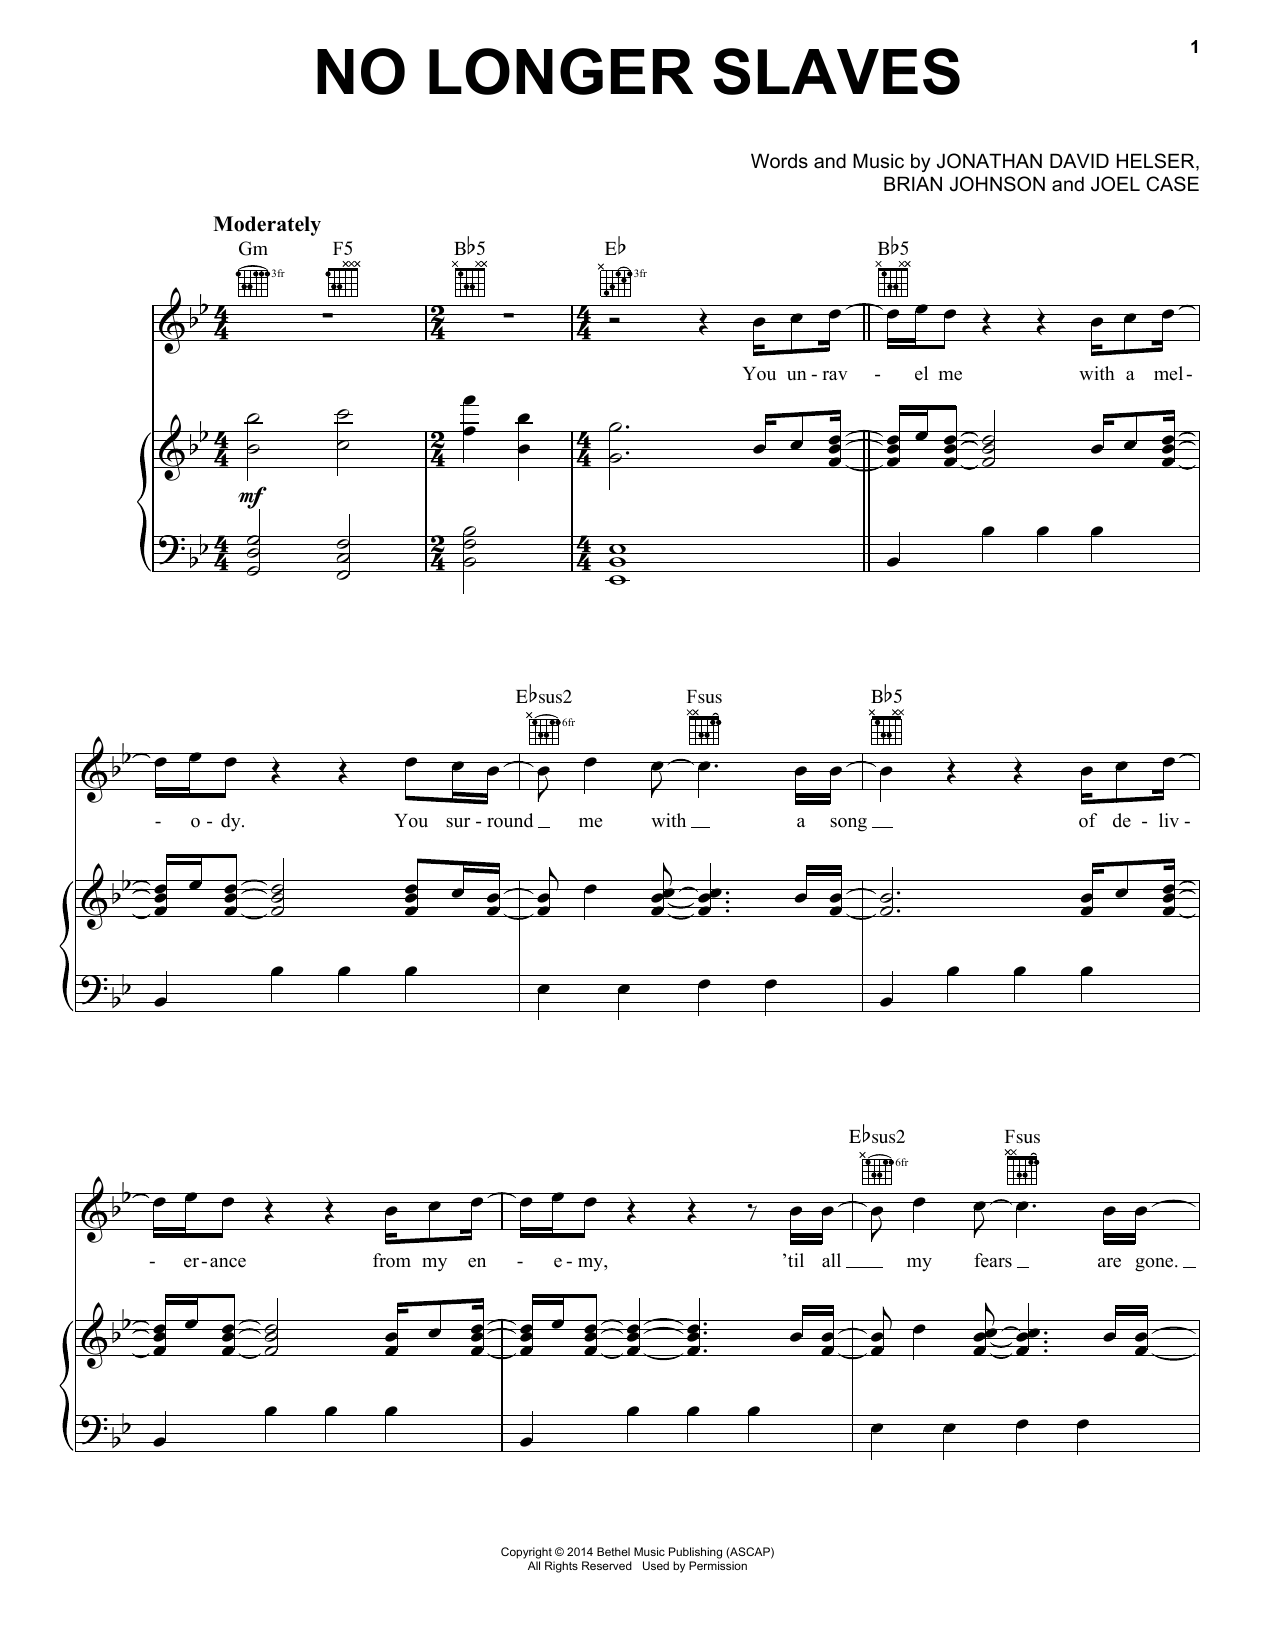 Bethel Music No Longer Slaves sheet music notes and chords. Download Printable PDF.